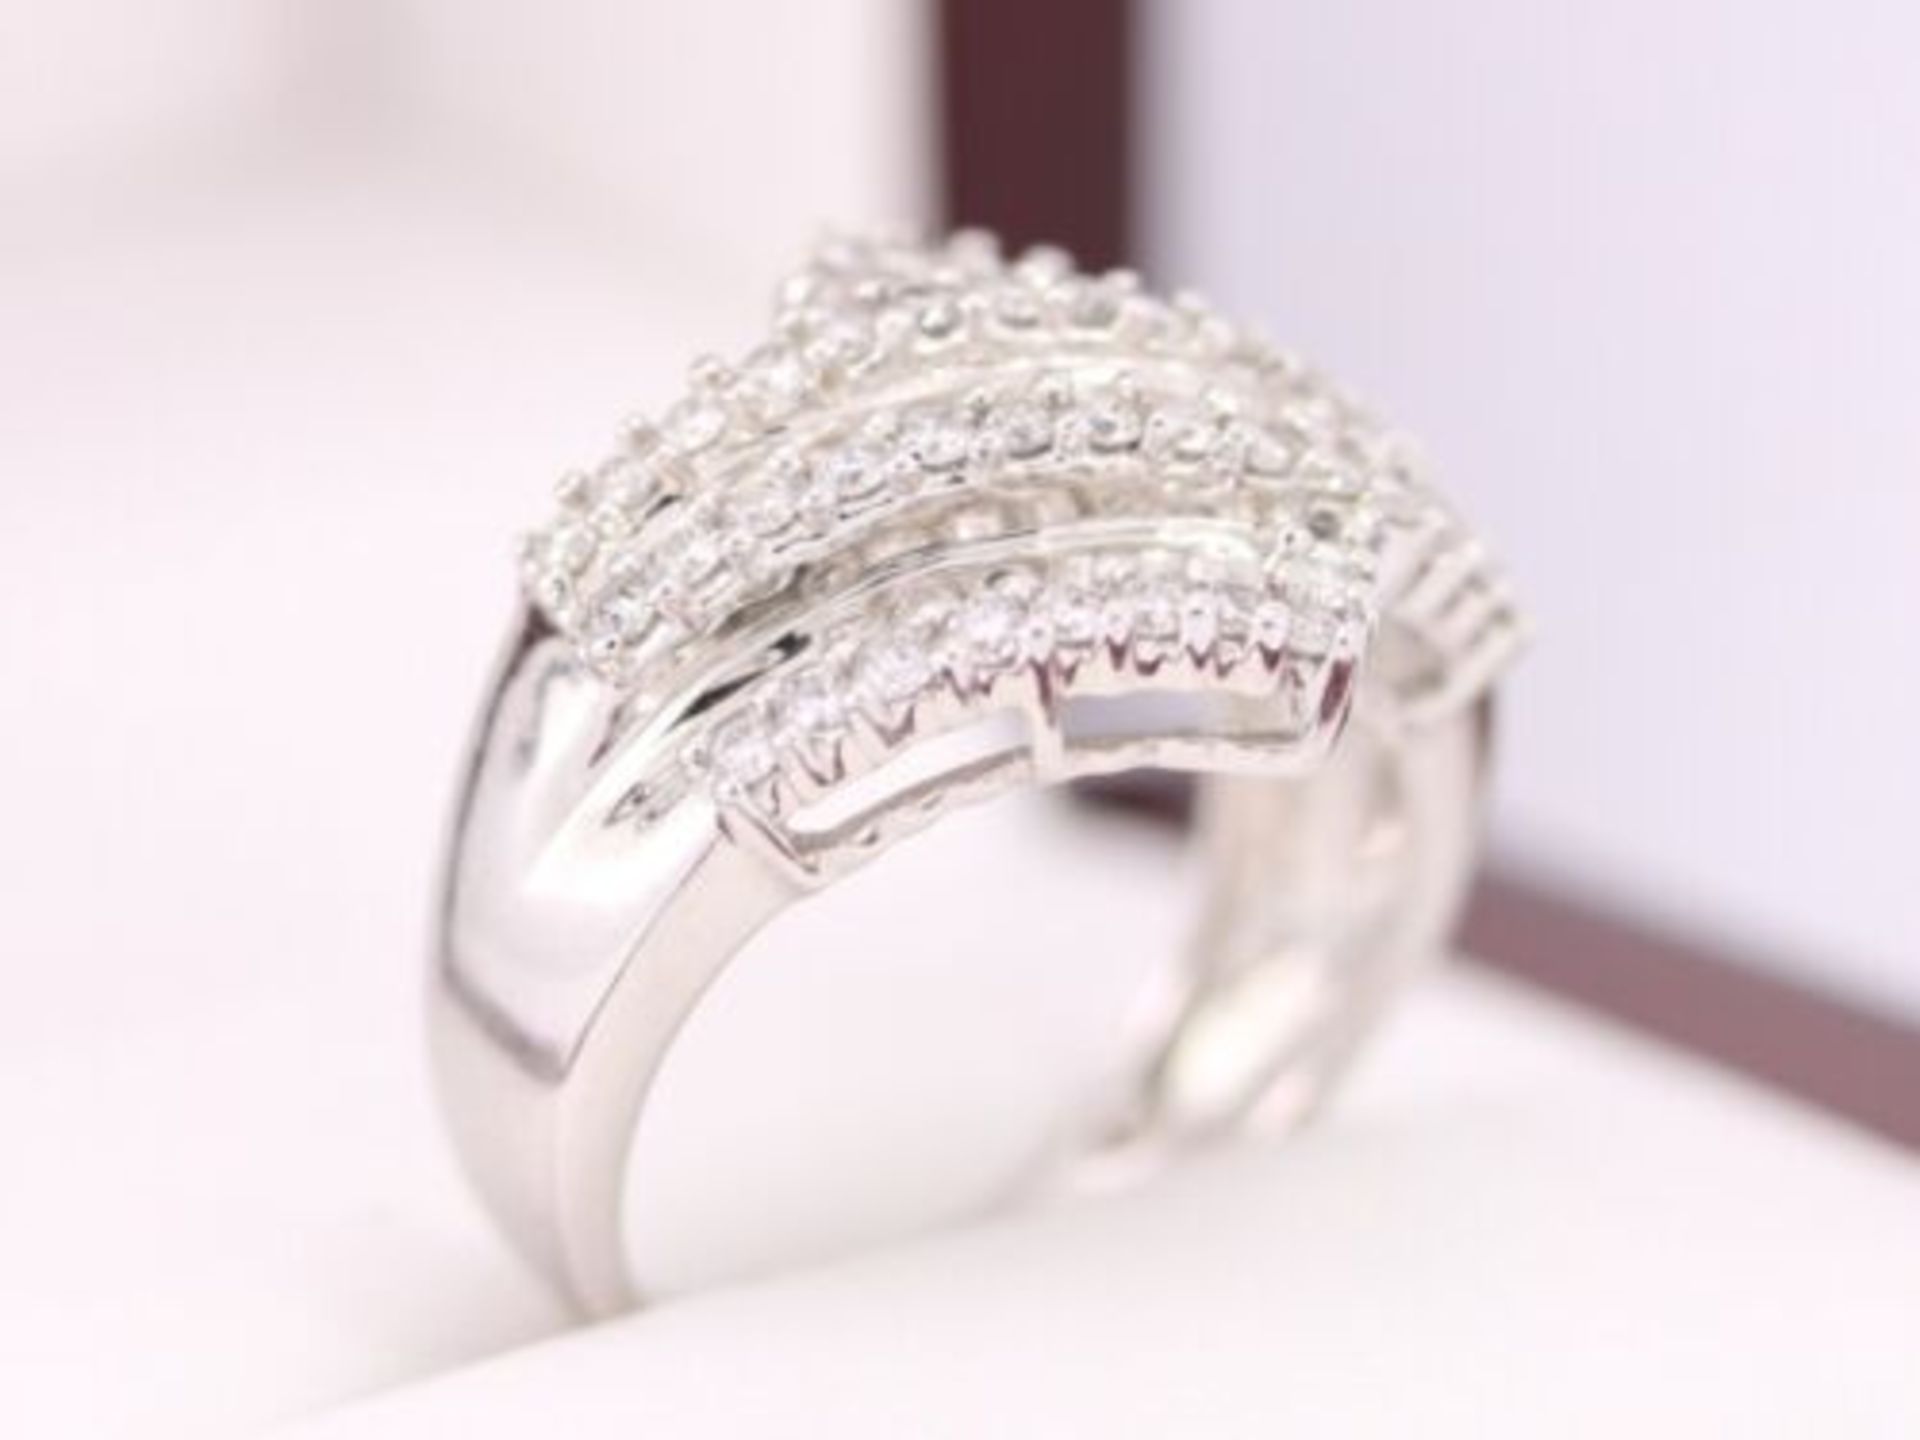 DIAMOND RING BEAUTIFUL 14CT WHITE GOLD RETRO STUNNING LADIES SIZE O 1/2 6.7G